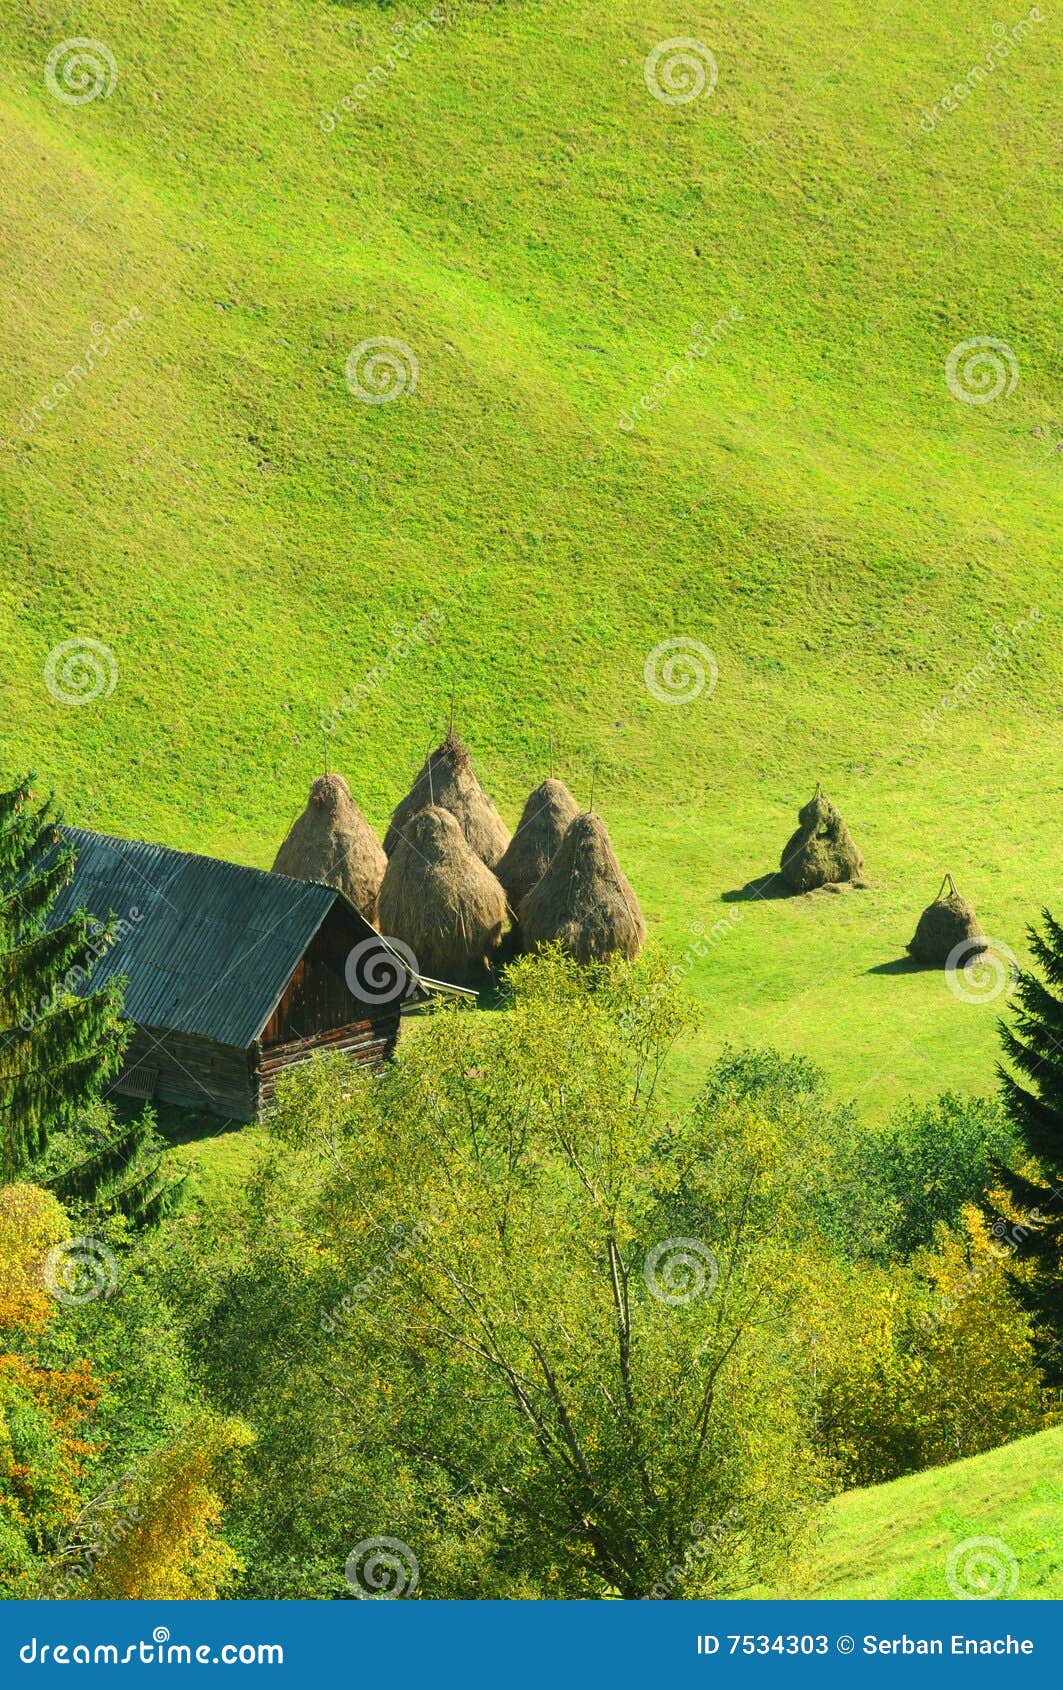 overlooking hillside farm